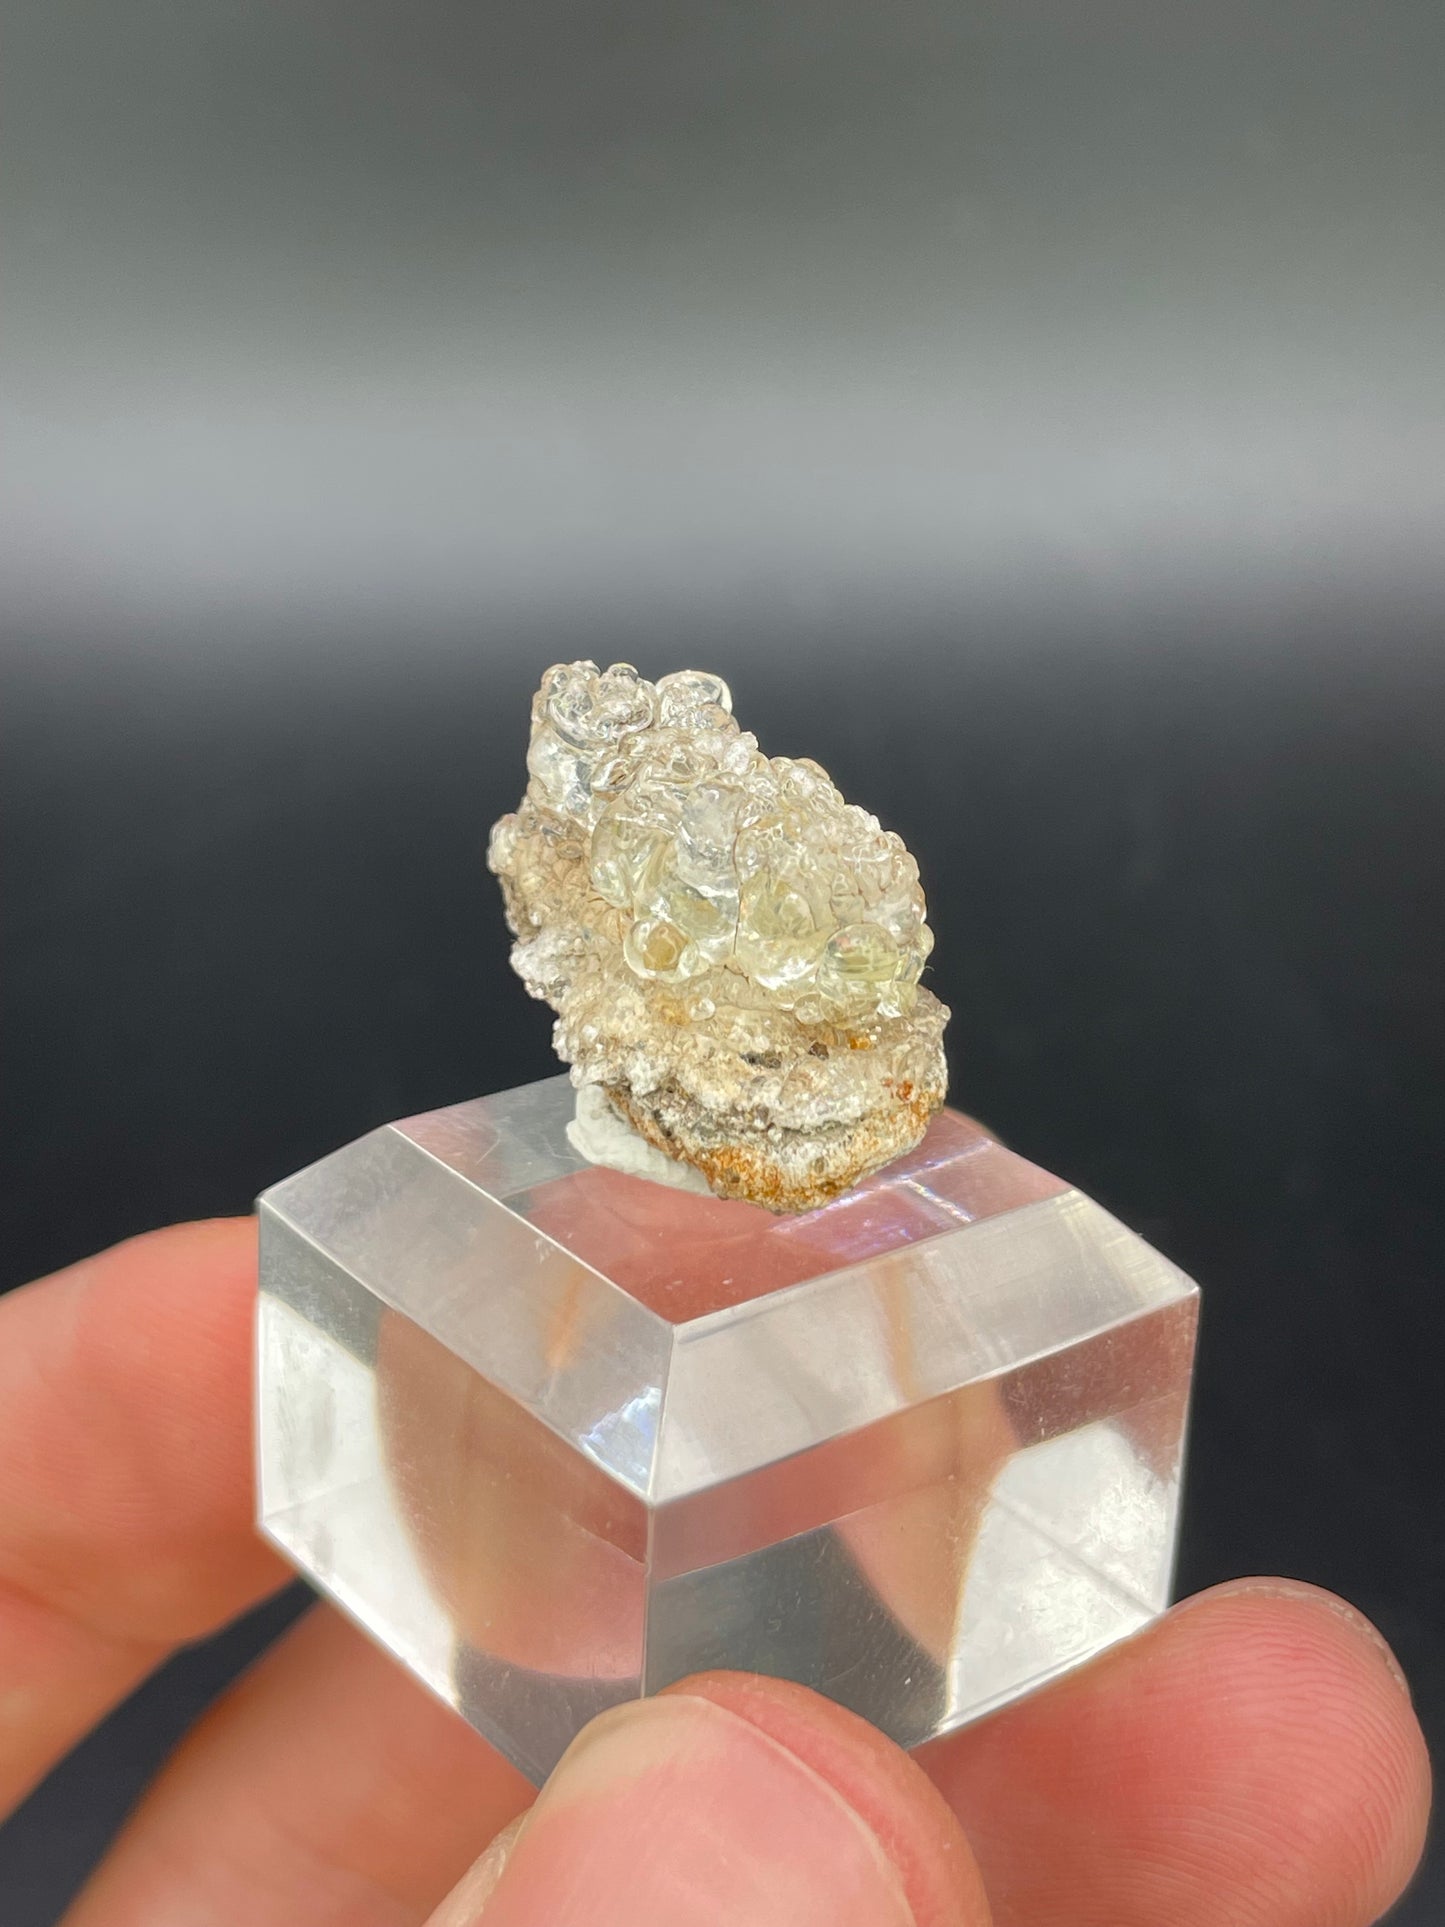 Hyalite Opal, Guanajuato Mexico